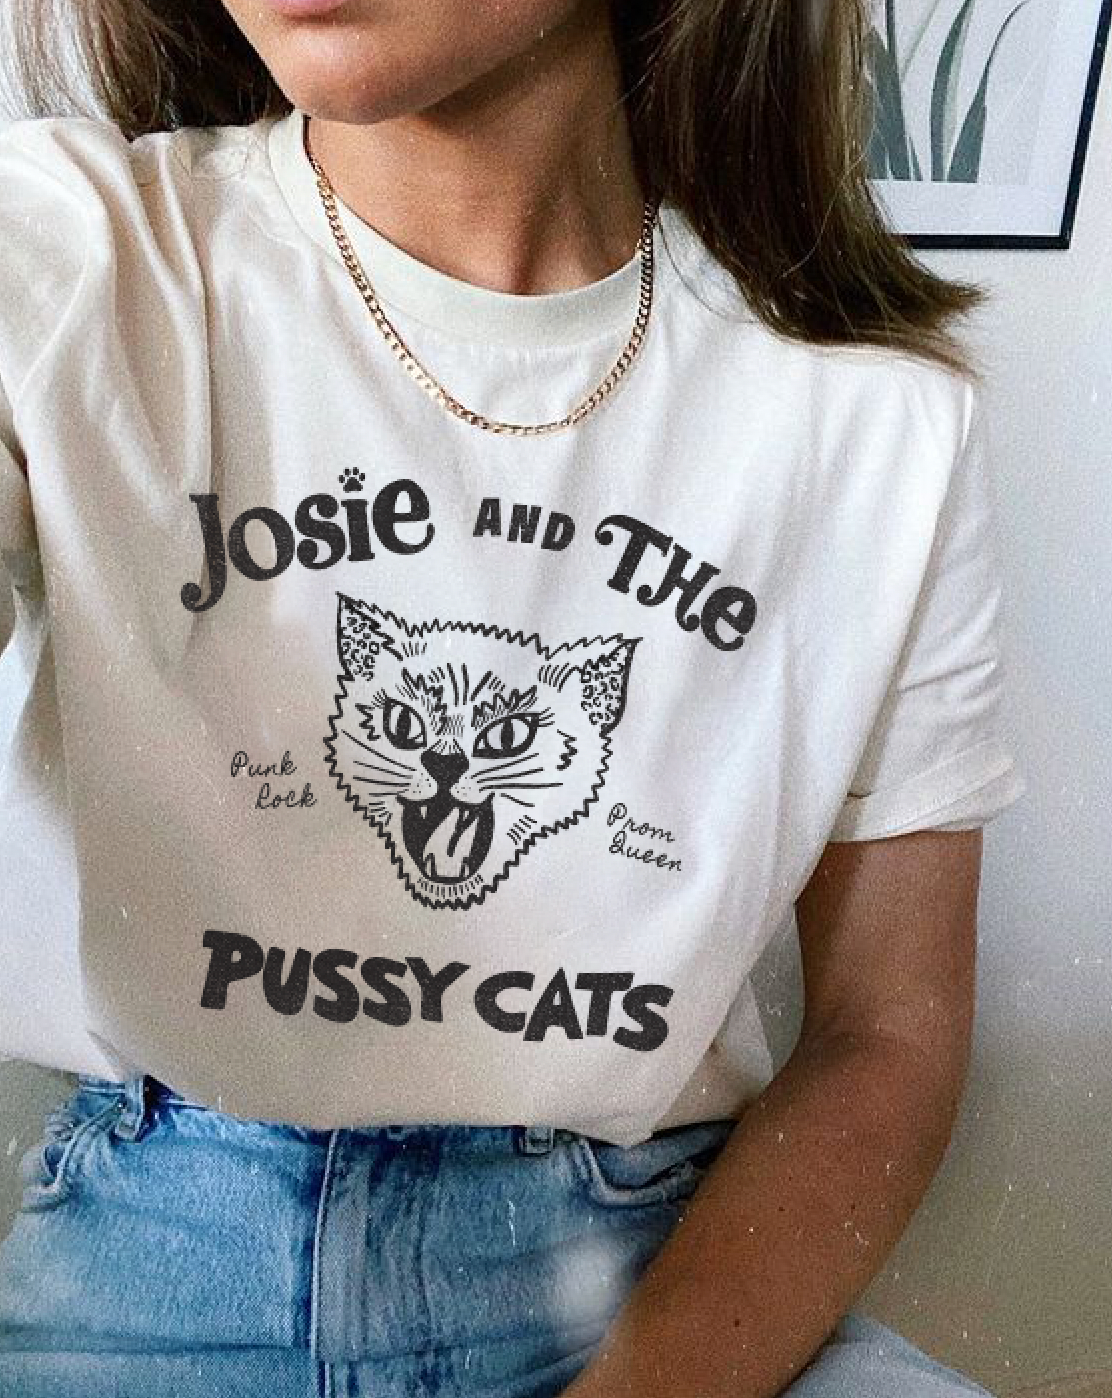 Josie Pussycats Film Club T-Shirt